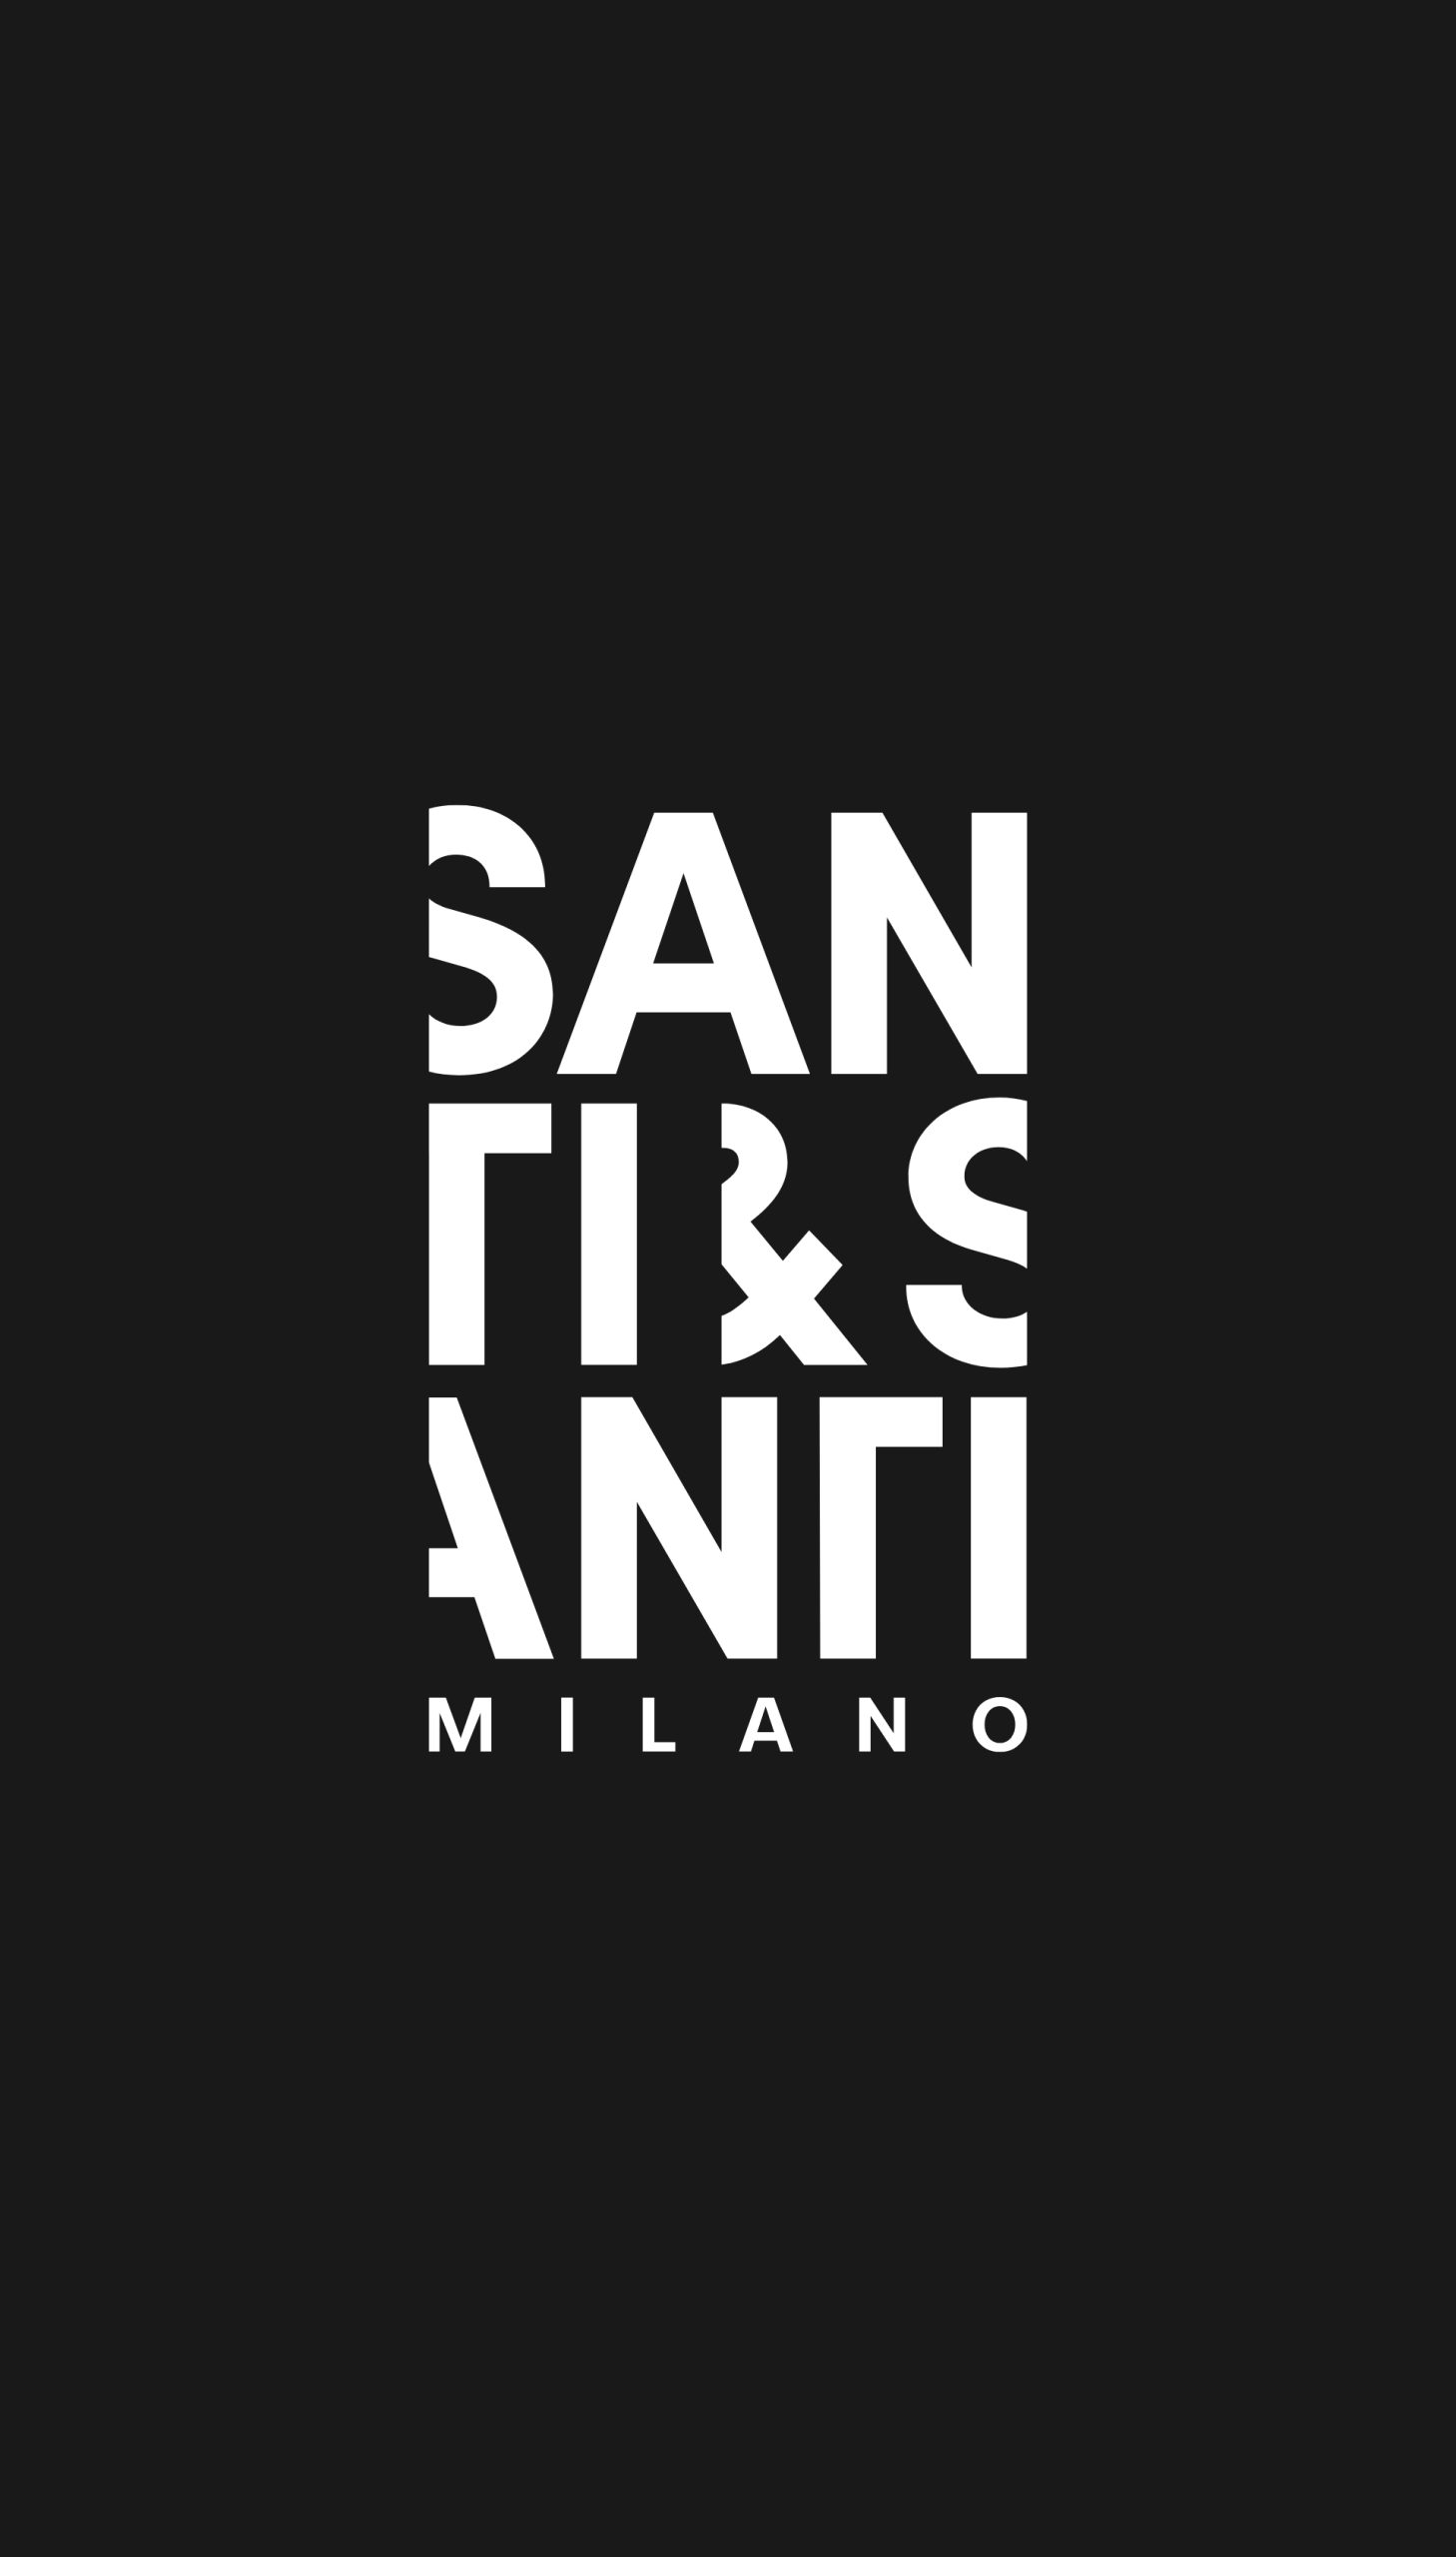 Santi&Santi MILANO